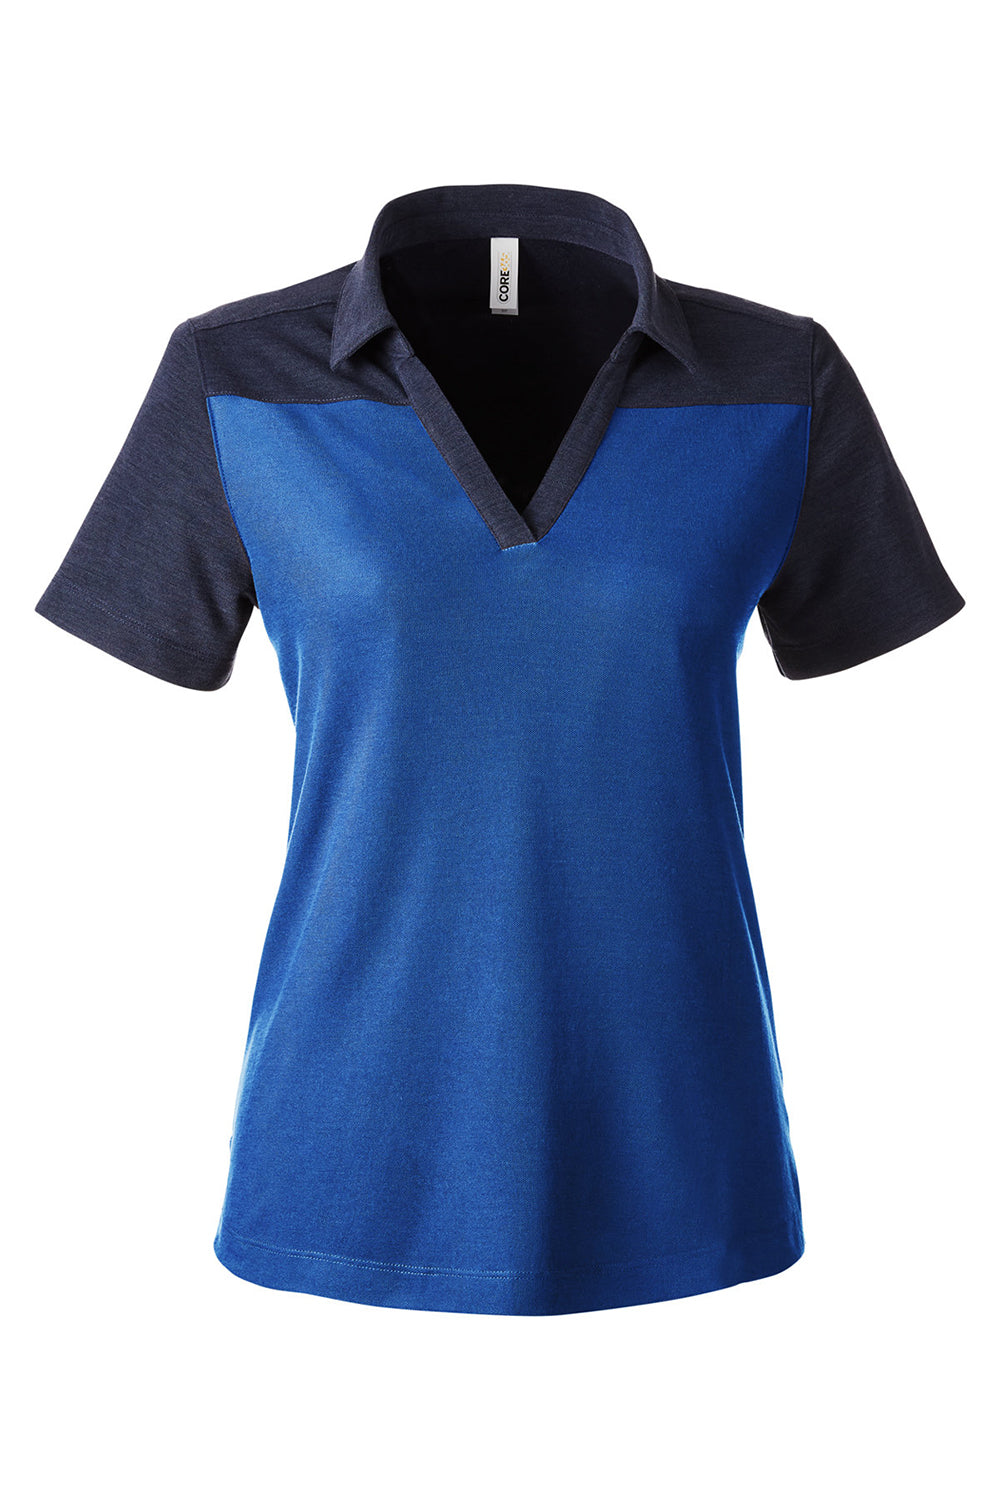 Core 365 CE112CW Mens Fusion ChromaSoft Performance Moisture Wicking Colorblock Short Sleeve Polo Shirt True Royal Blue/Heather Navy Blue Flat Front